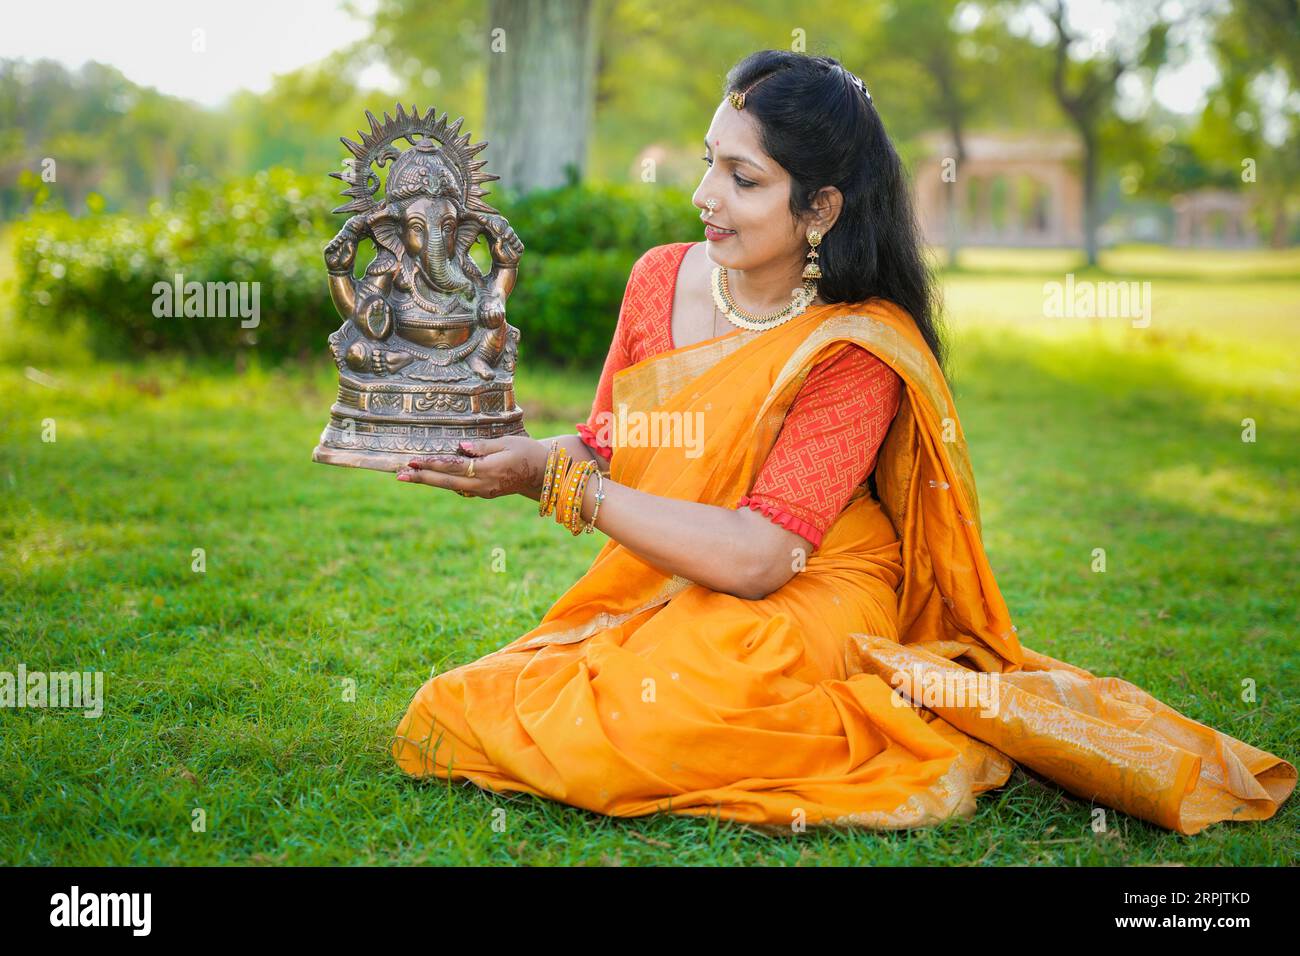 Happy young indian woman wearing saree sitting holding lord Ganesha idol outdoor at park celebrating Ganesh Chaturthi festival. Stock Photo